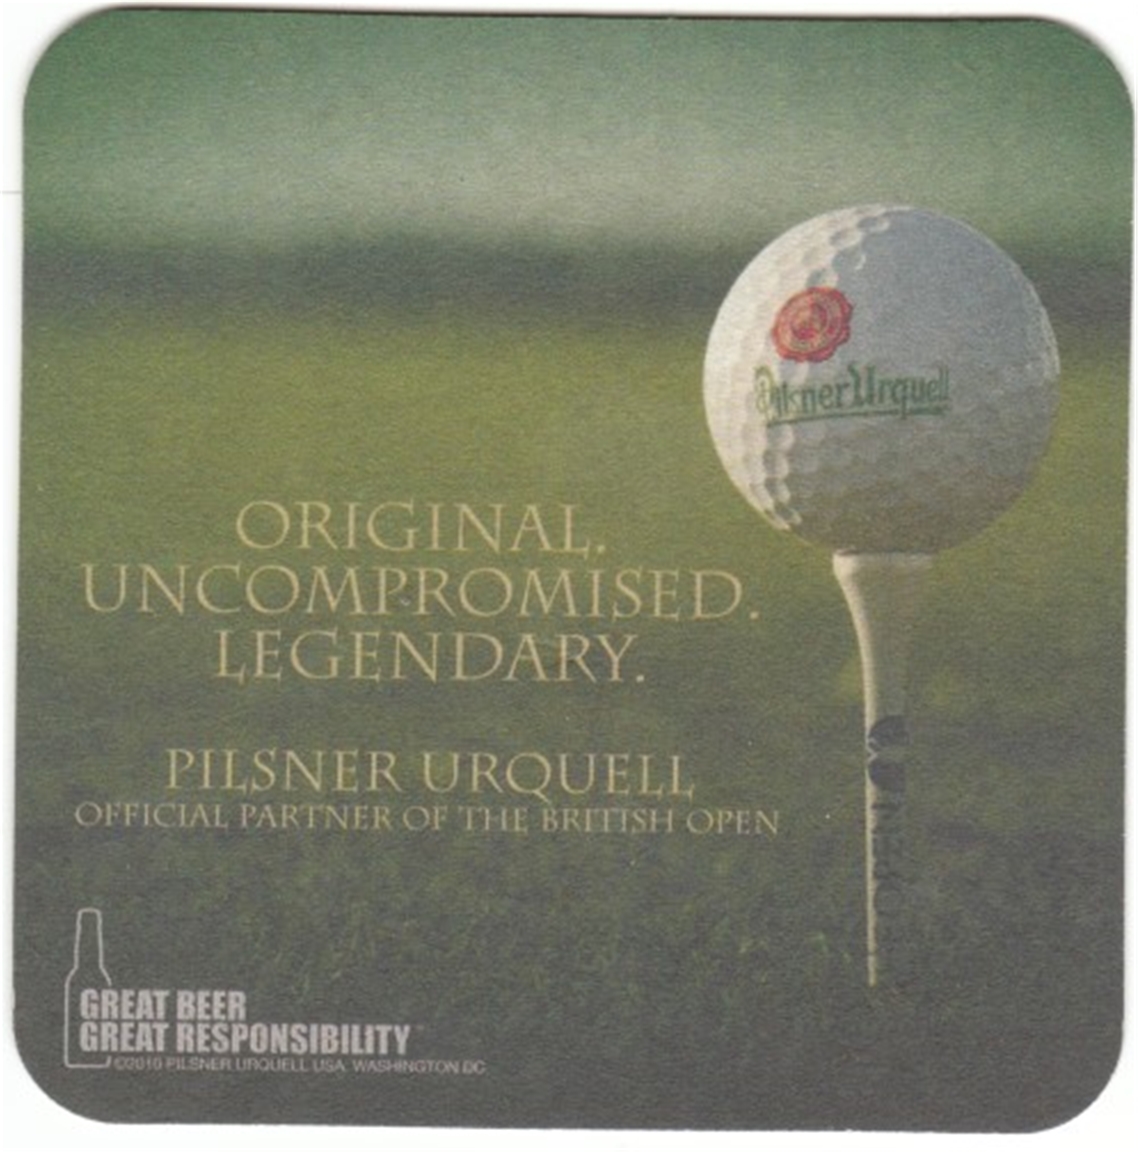 Pilsner Urquell Pure Golf Beer Coaster